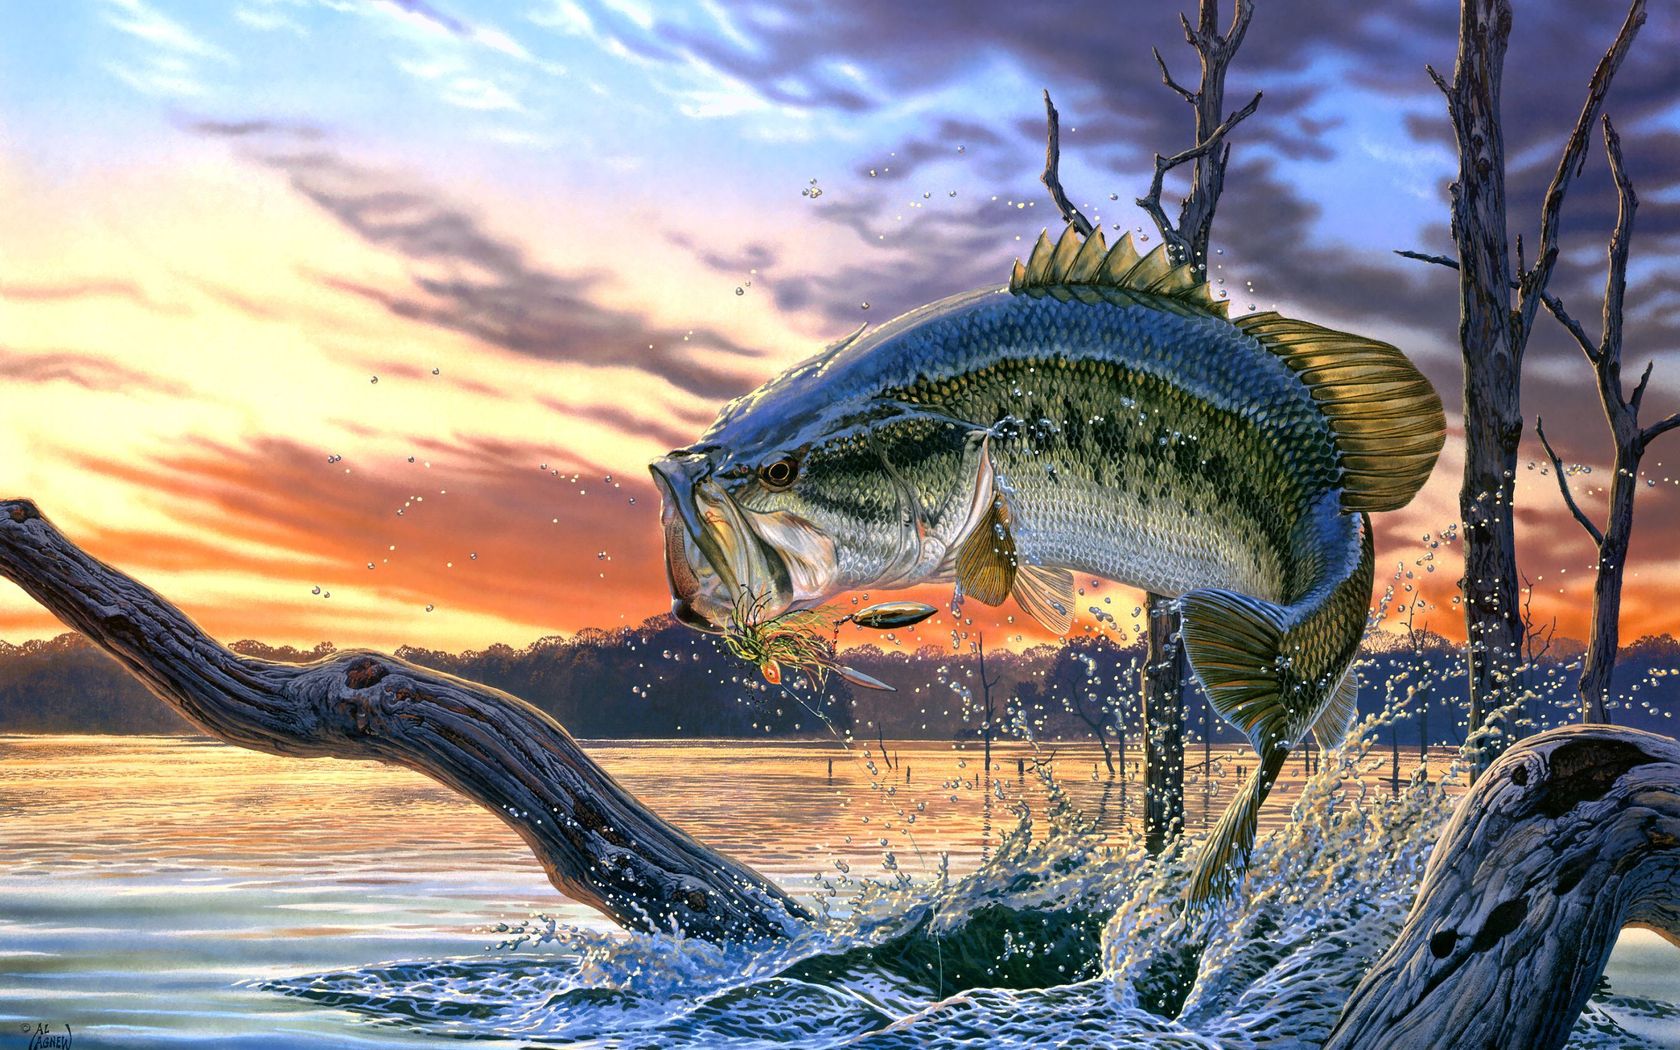  orglargemouth bass fishing wallpaper background screensaver 1680x1050